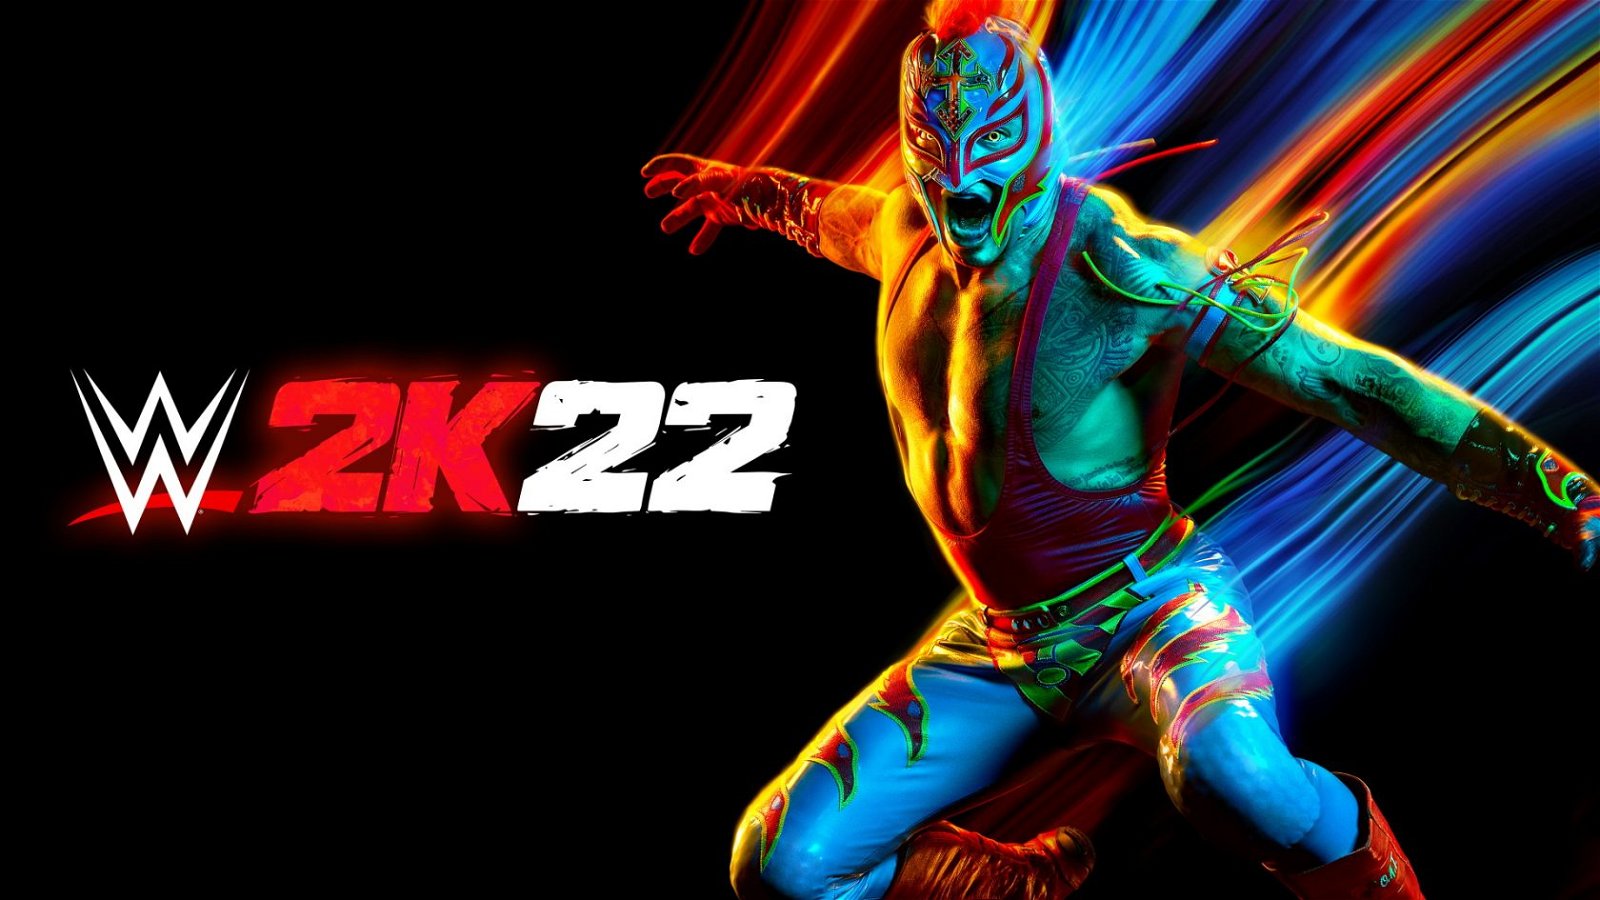 Alternative WWE 2K22 Trailer Leaks Showcasing Updated Brock Lesnar